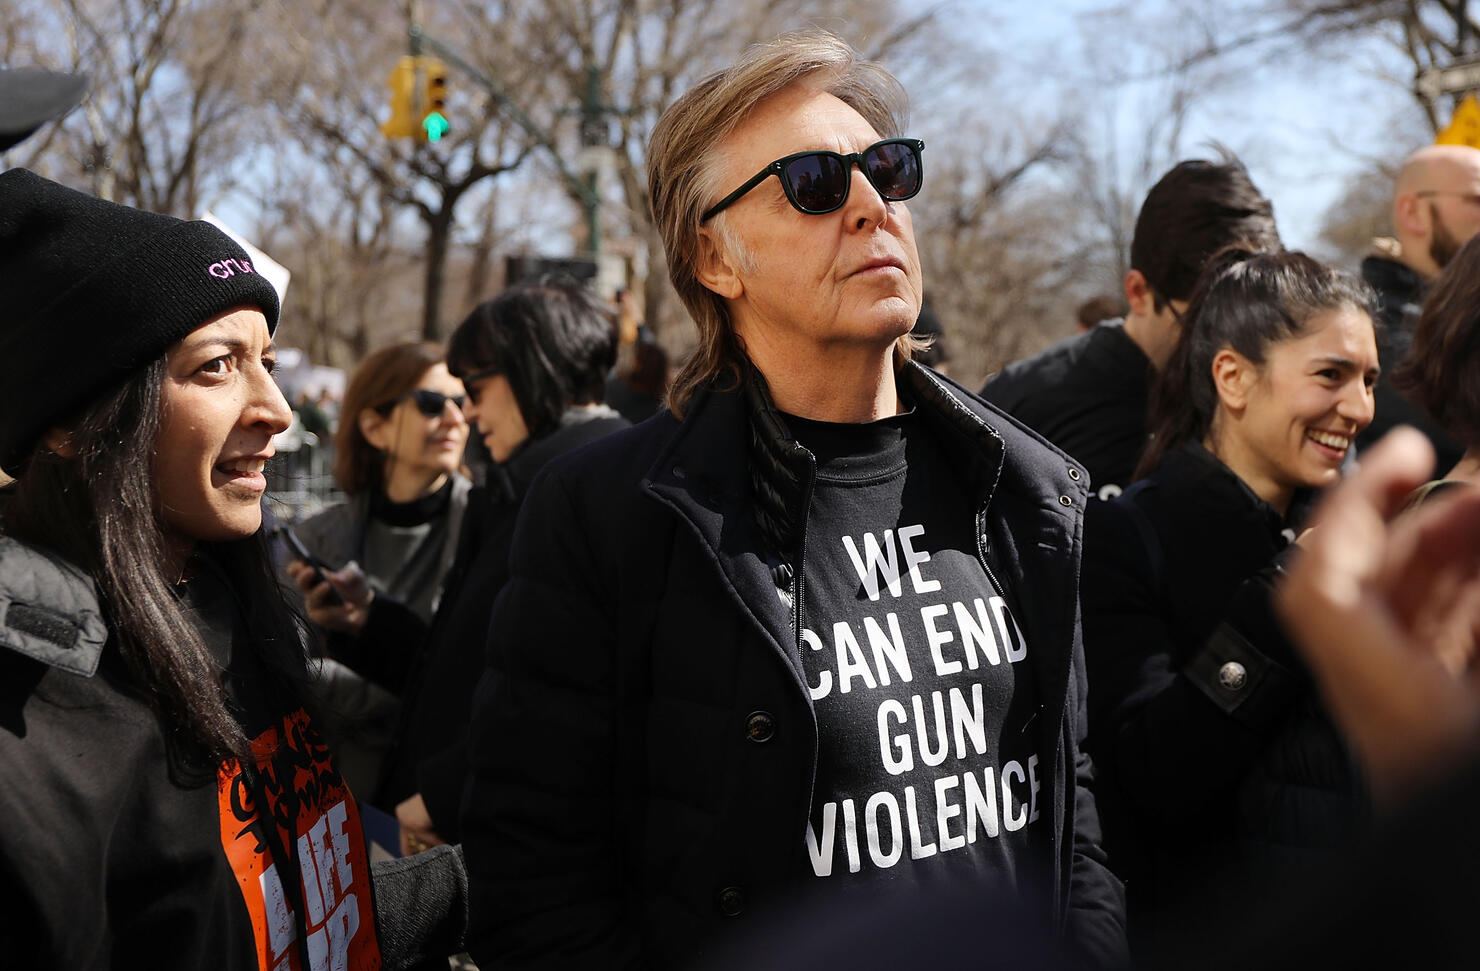 Paul McCartney marches against gun violence